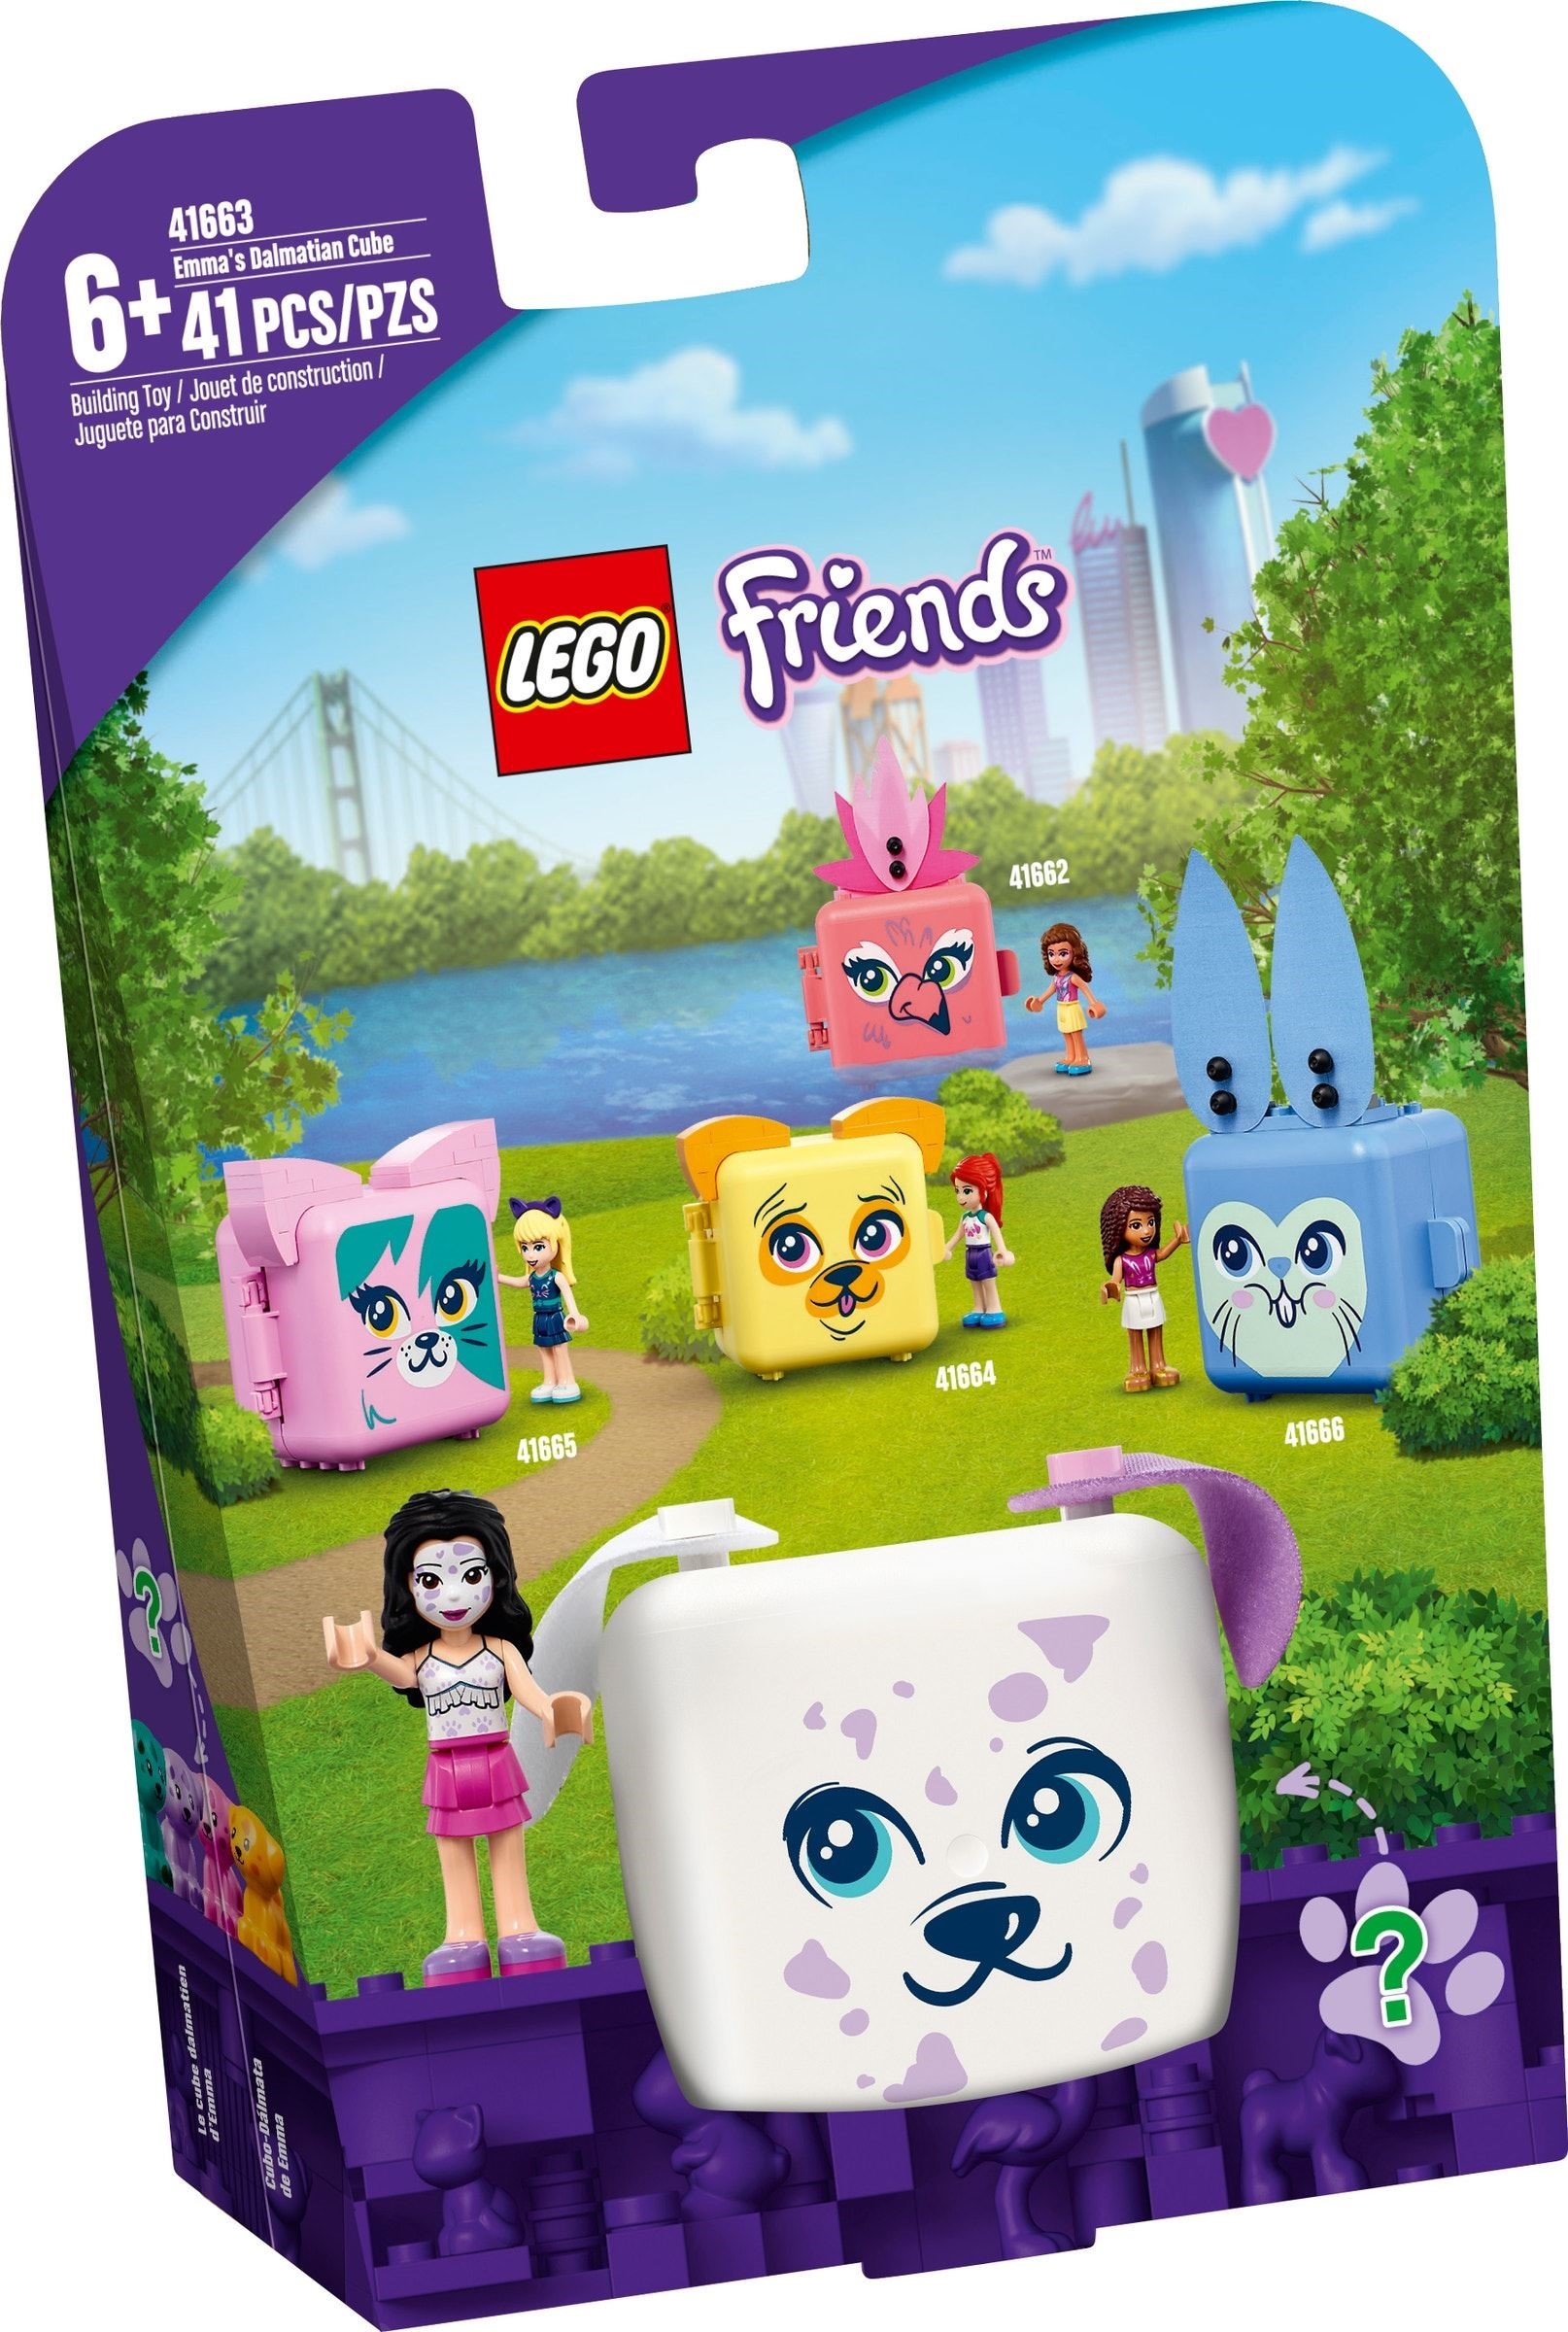 LEGO Friends - Emma's Dalmatian Cube (41663)